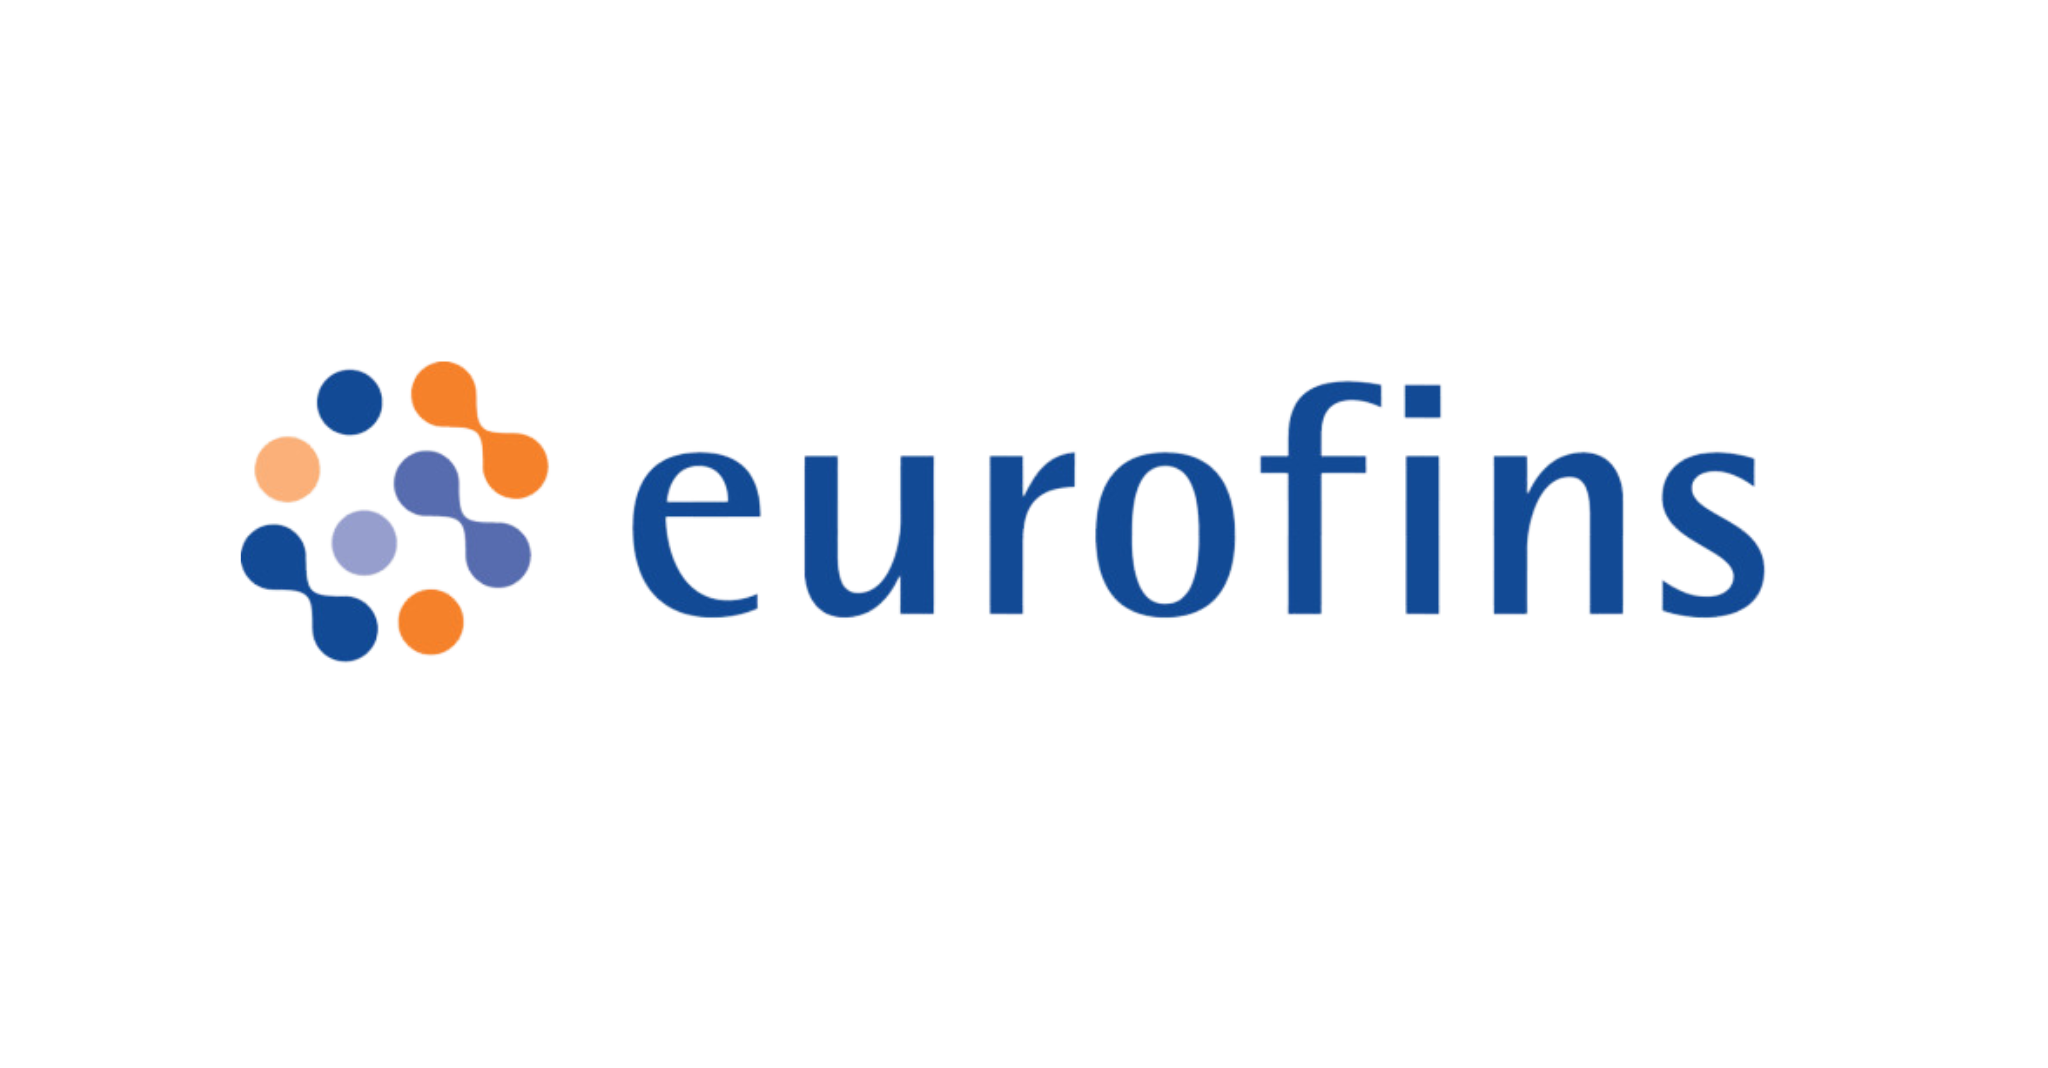 Eurofins-logo